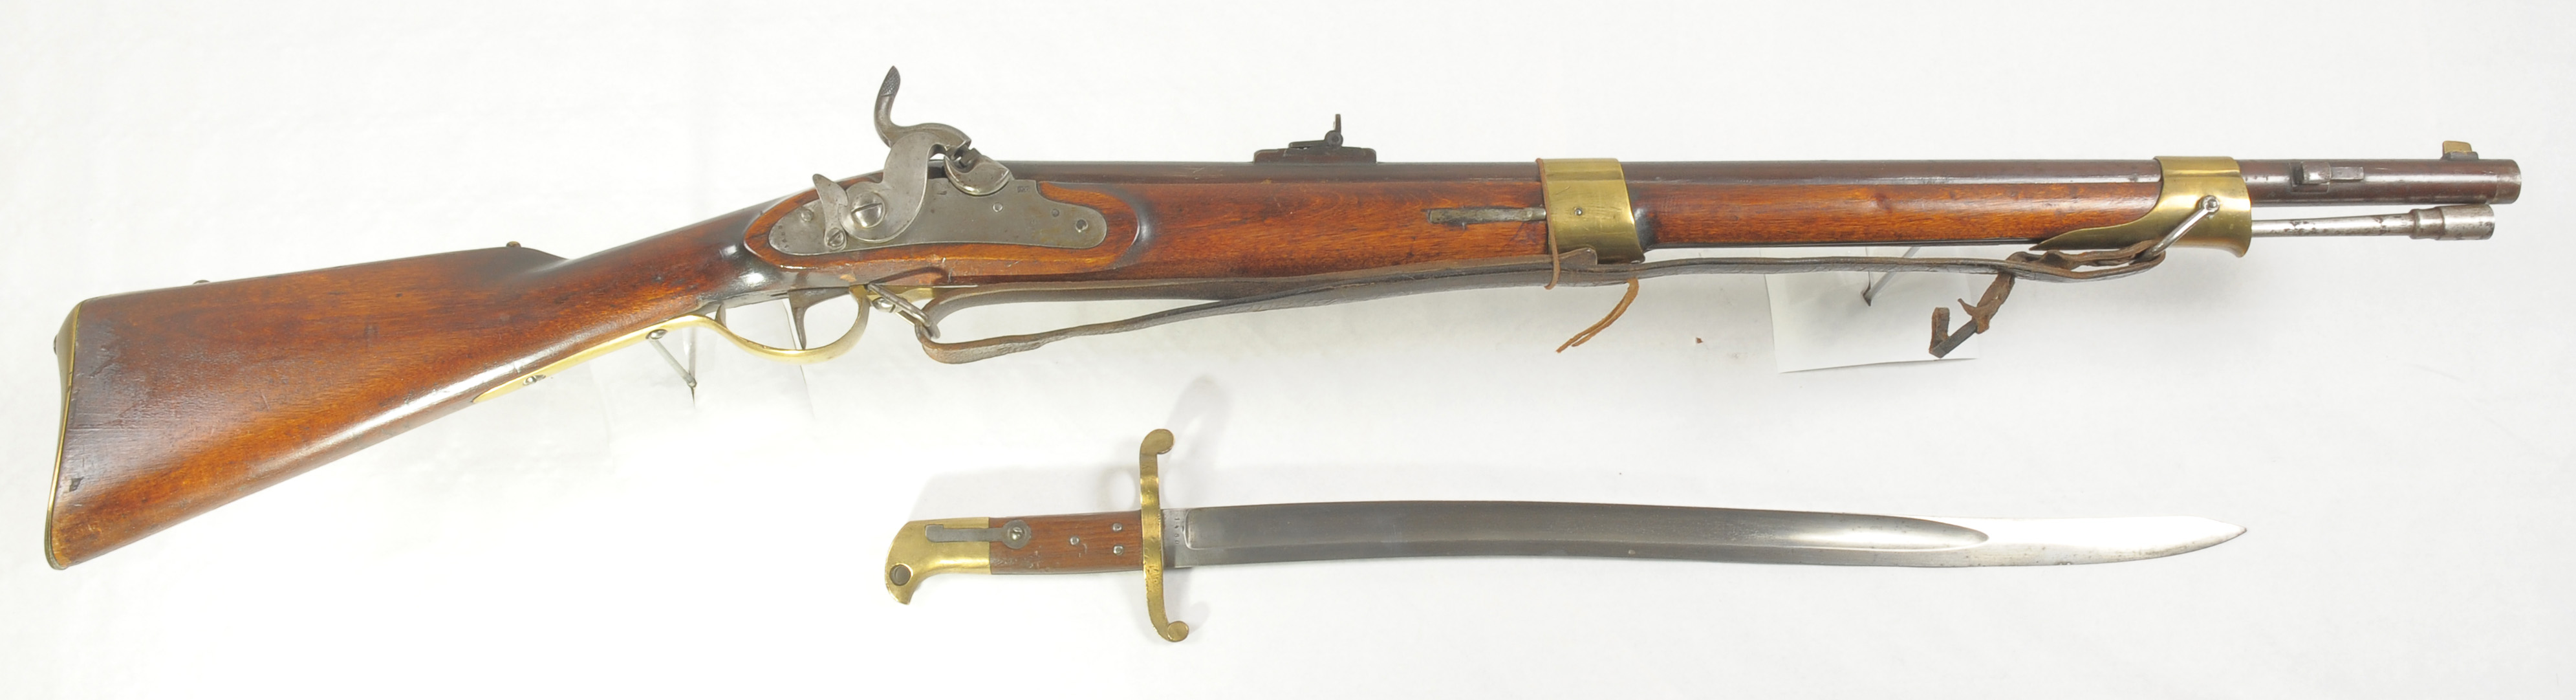 ./guns/rifle/bilder/Rifle-Kongsberg-Perkusjon-M1834-41-60-NNNN-1.jpg